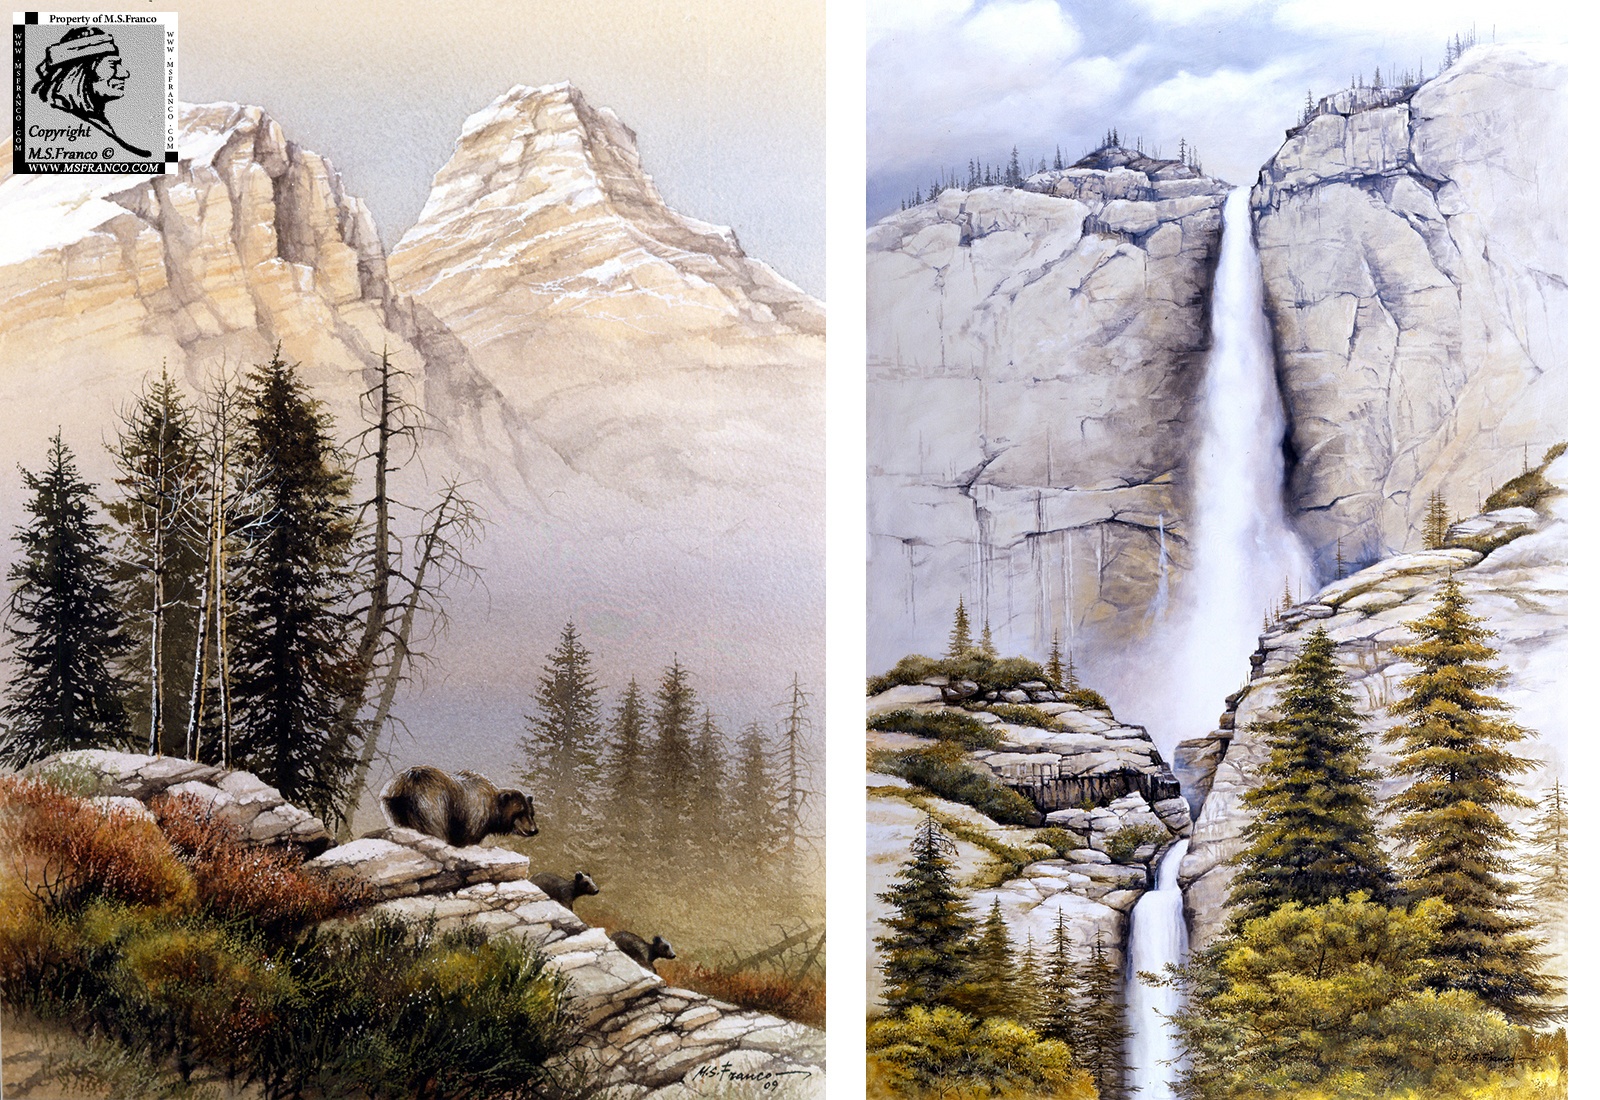 "Grizz Territory"
and
"Yosemite Falls"